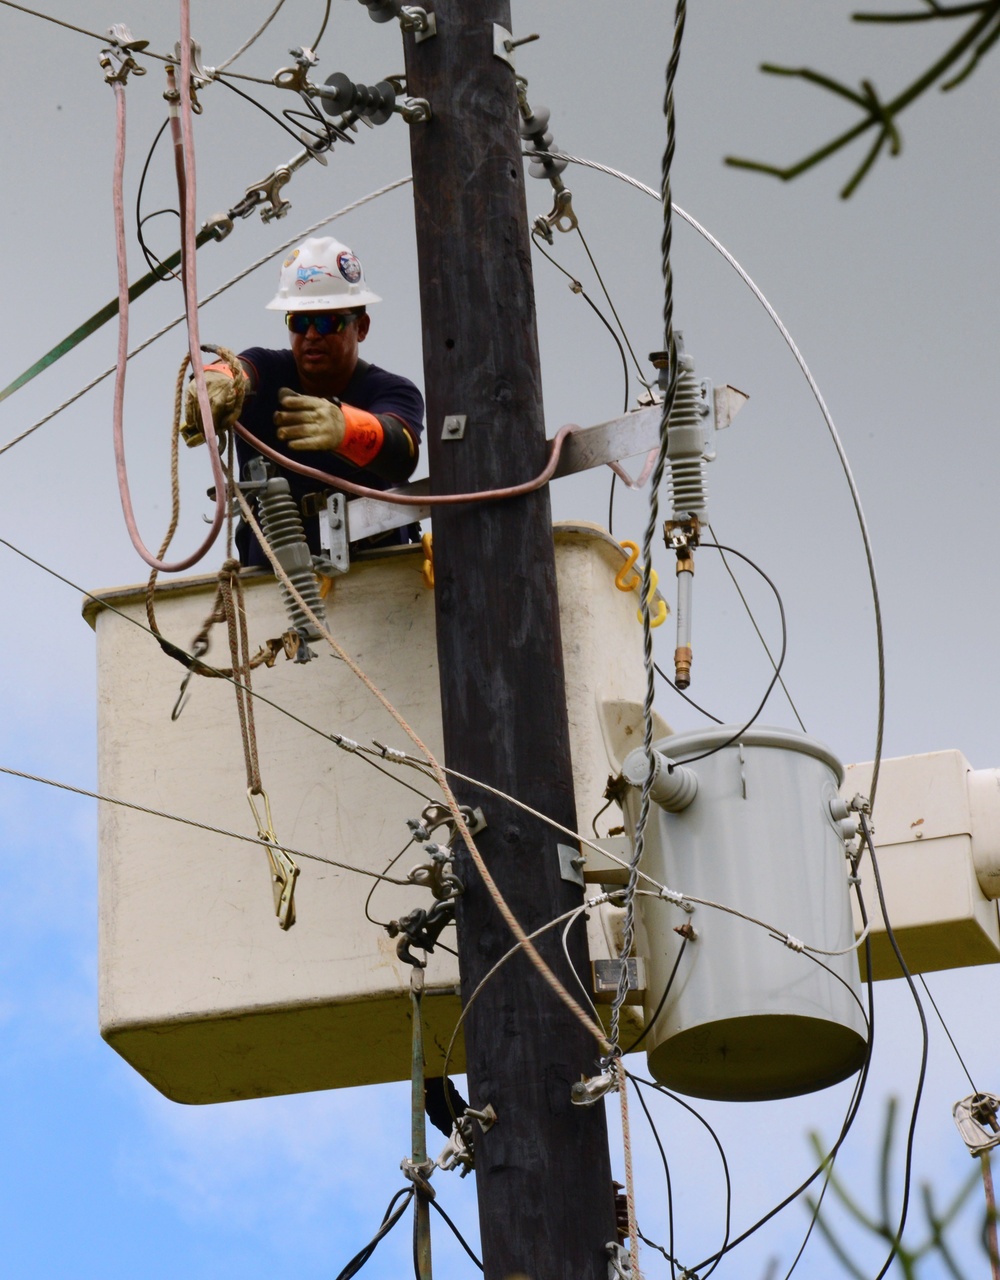 Power restoration in Orocovis, Puerto Rico